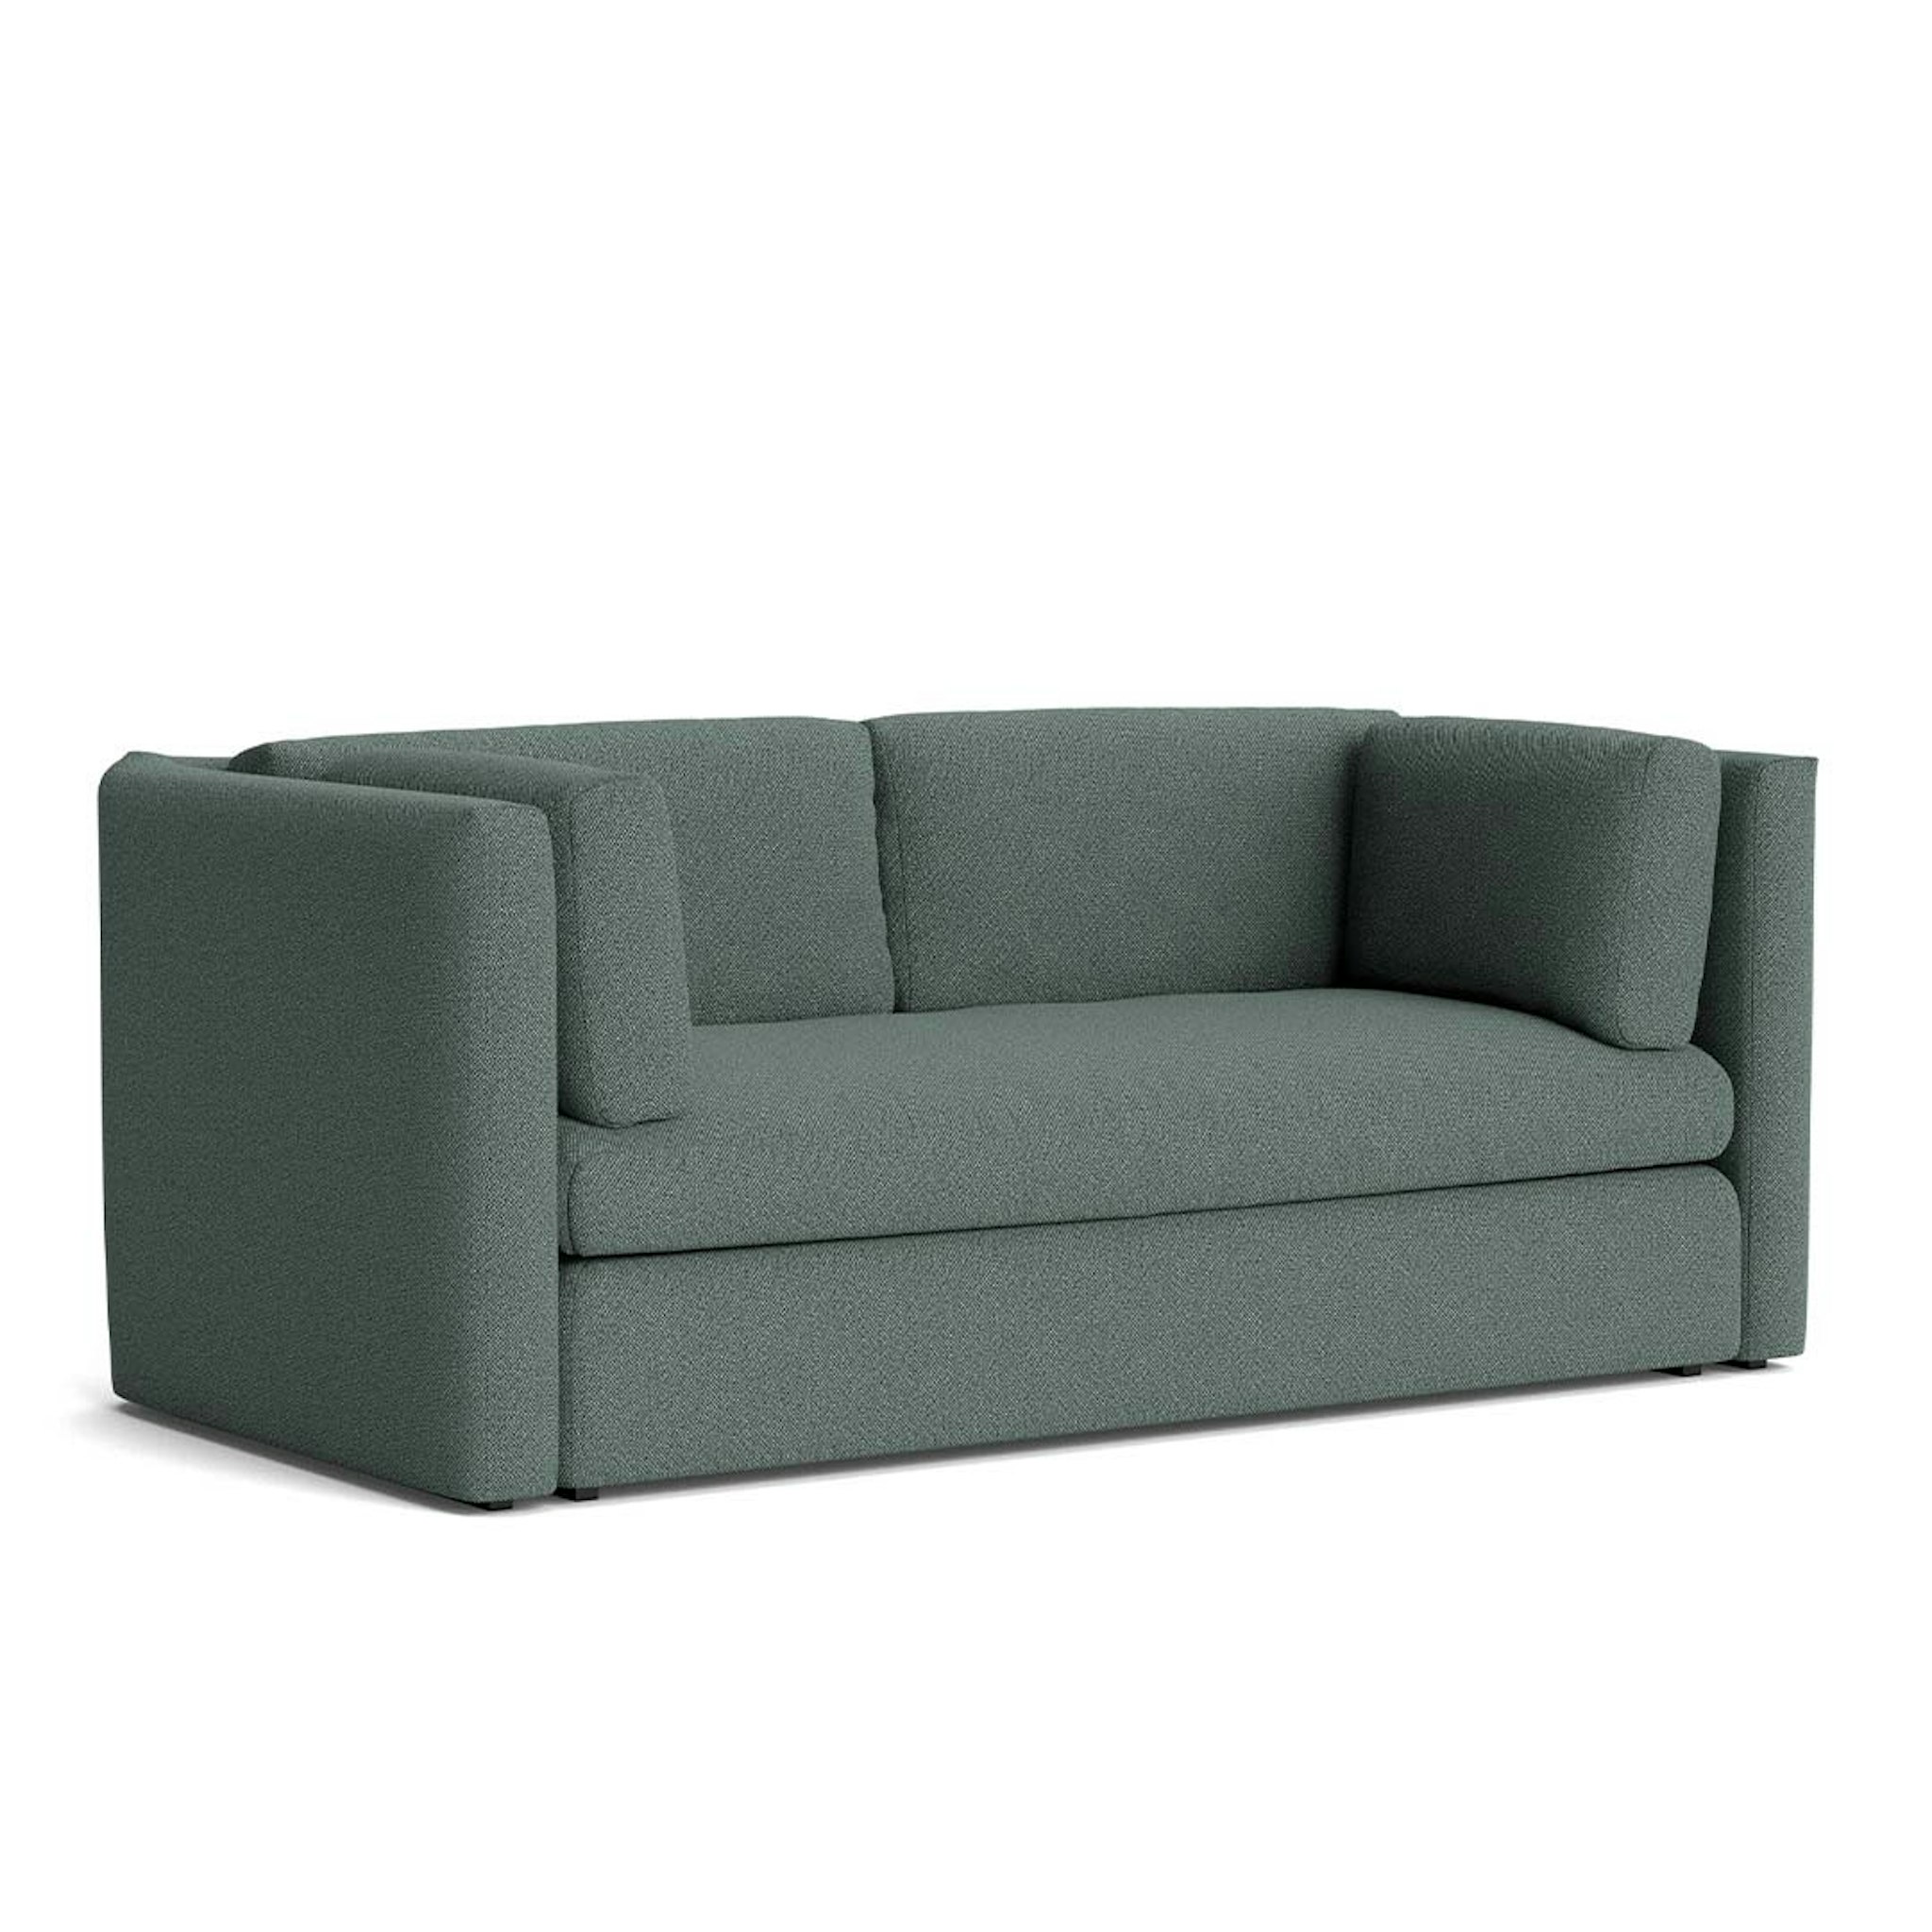 Hackney Sofa 2 seater by Hay